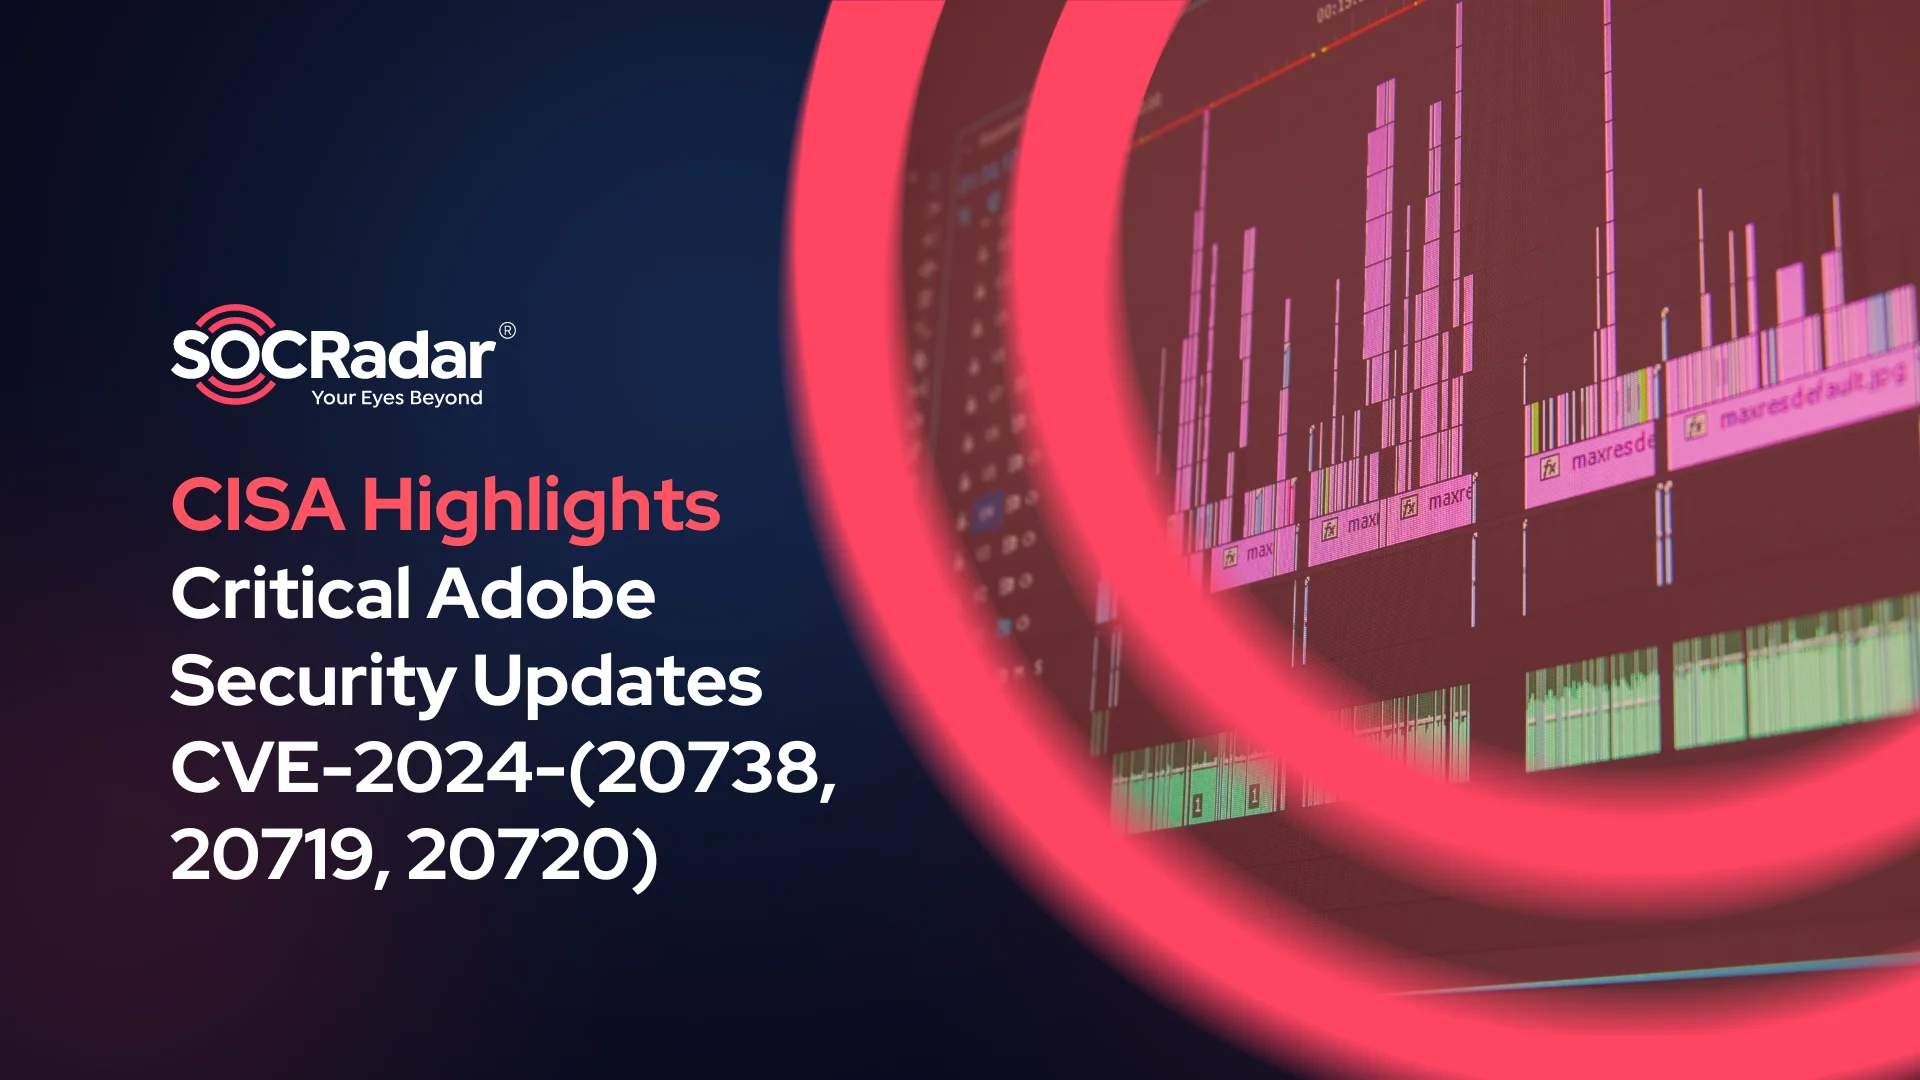 SOCRadar® Cyber Intelligence Inc. | CISA Highlights Critical Adobe Security Updates for Acrobat, Magento, and More (CVE-2024-20738, CVE-2024-20719, CVE-2024-20720)